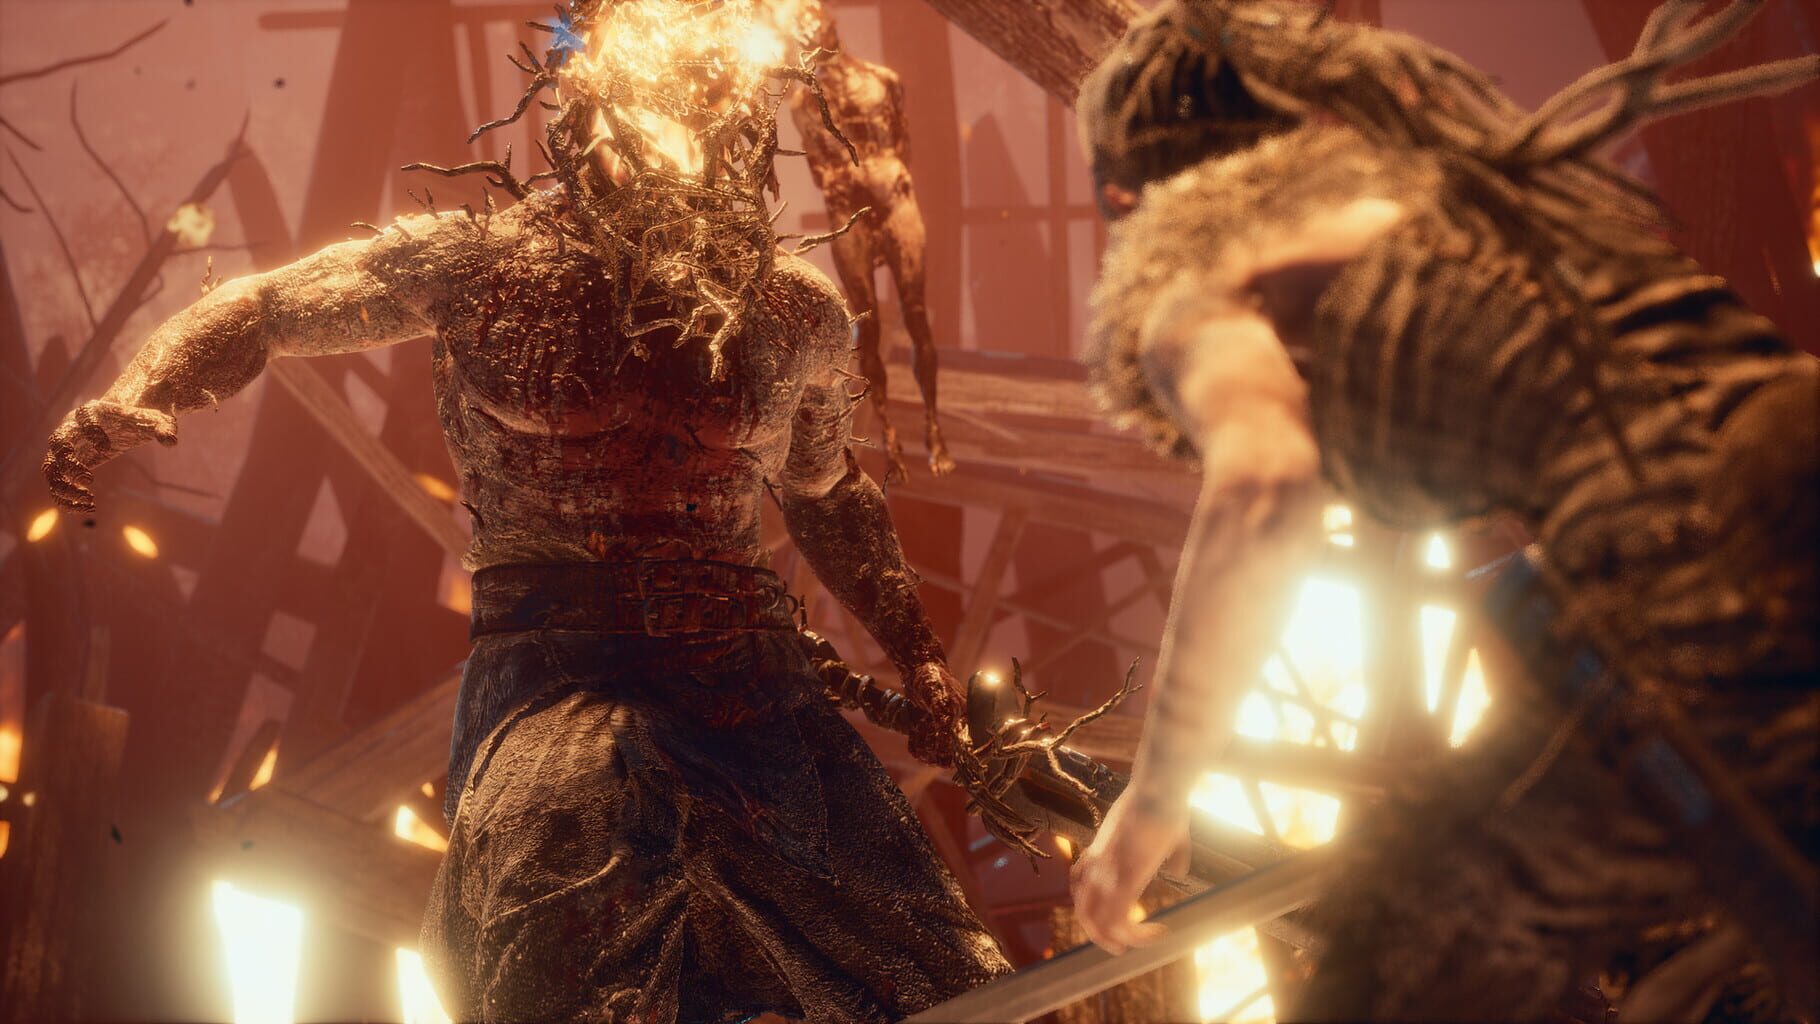 Hellblade: Senuas Sacrifice screenshots